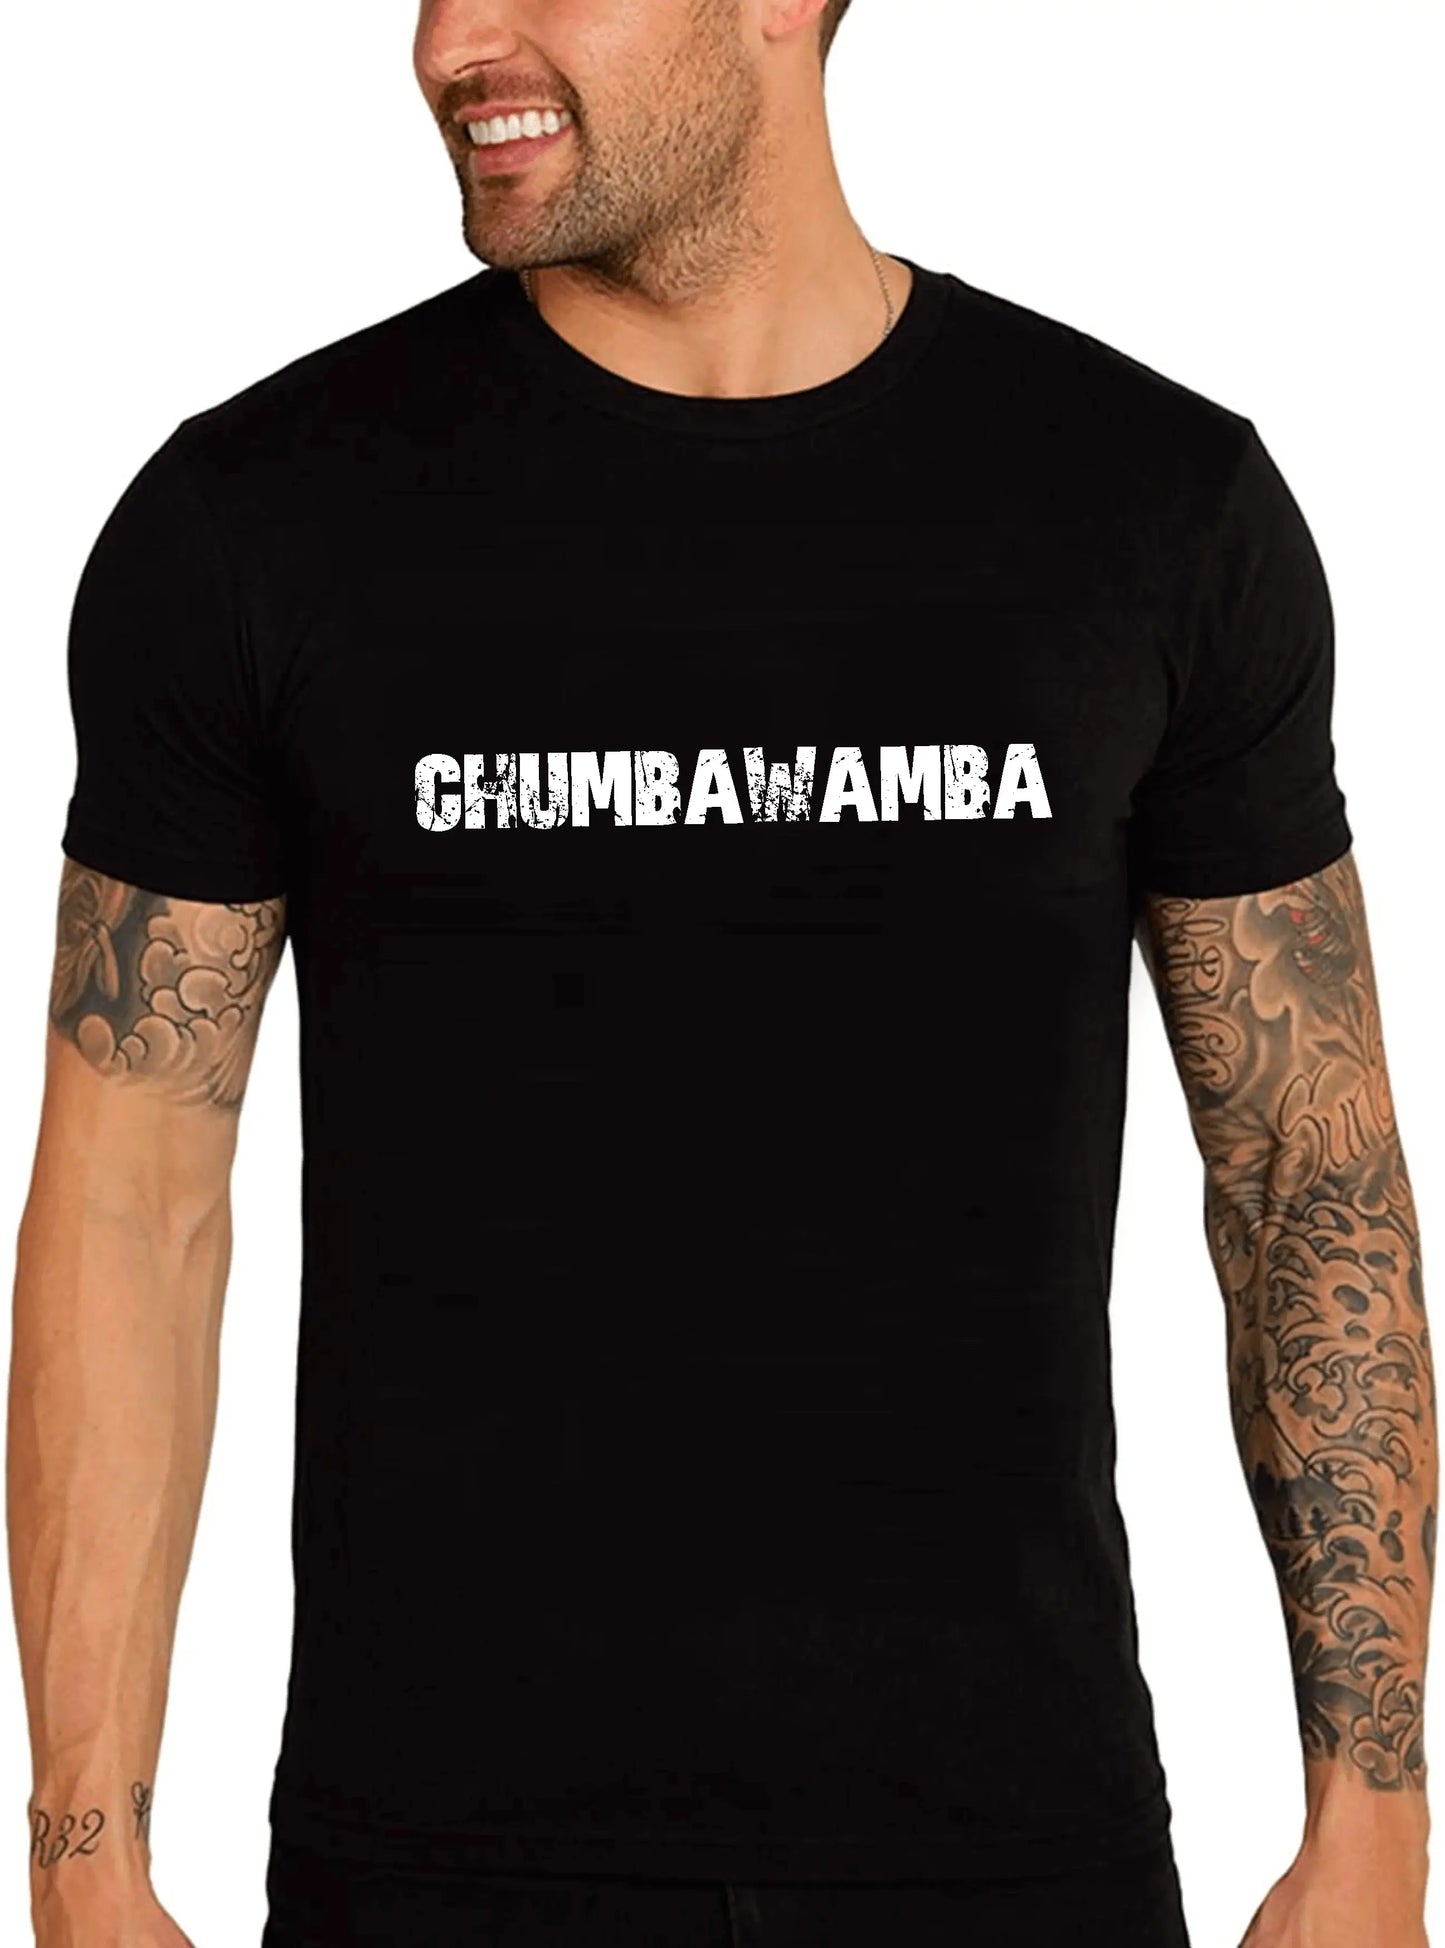 Men's Graphic T-Shirt Chumbawamba Eco-Friendly Limited Edition Short Sleeve Tee-Shirt Vintage Birthday Gift Novelty